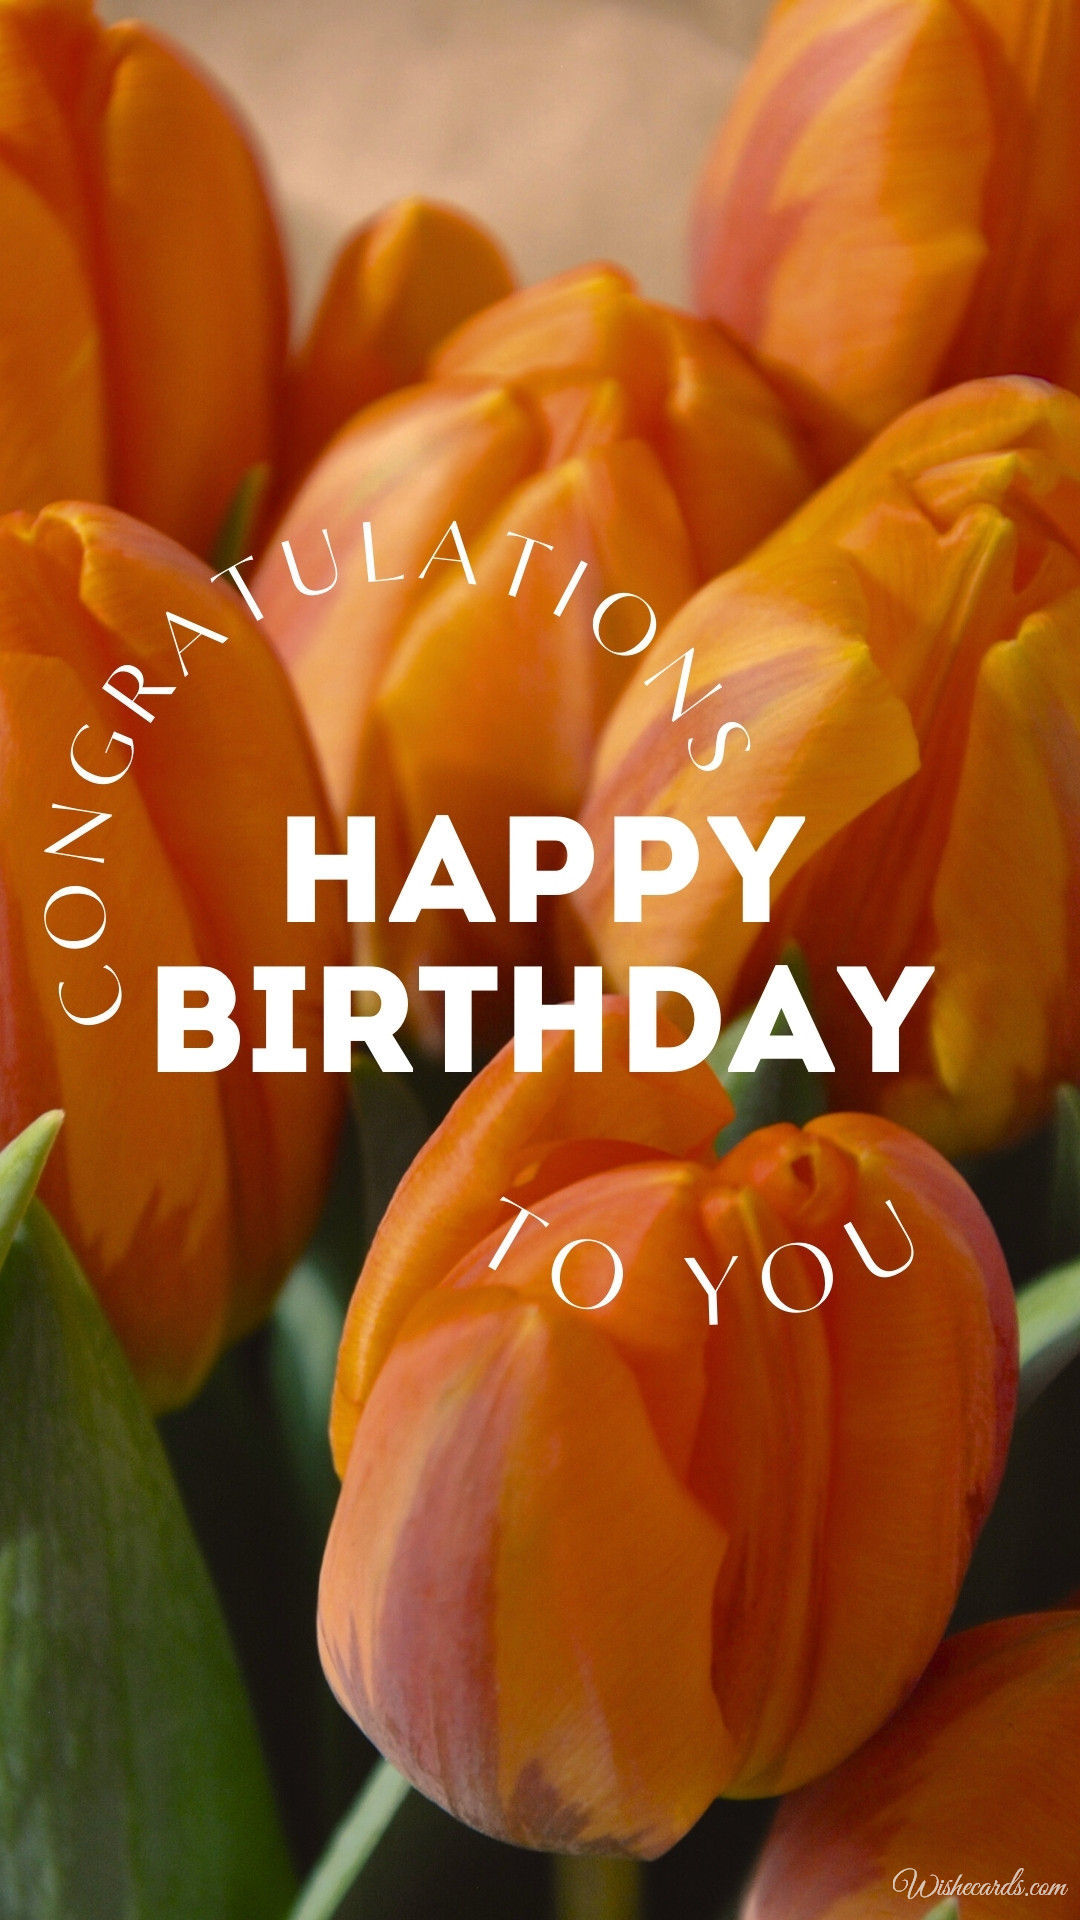 Birthday Wish with Tulips